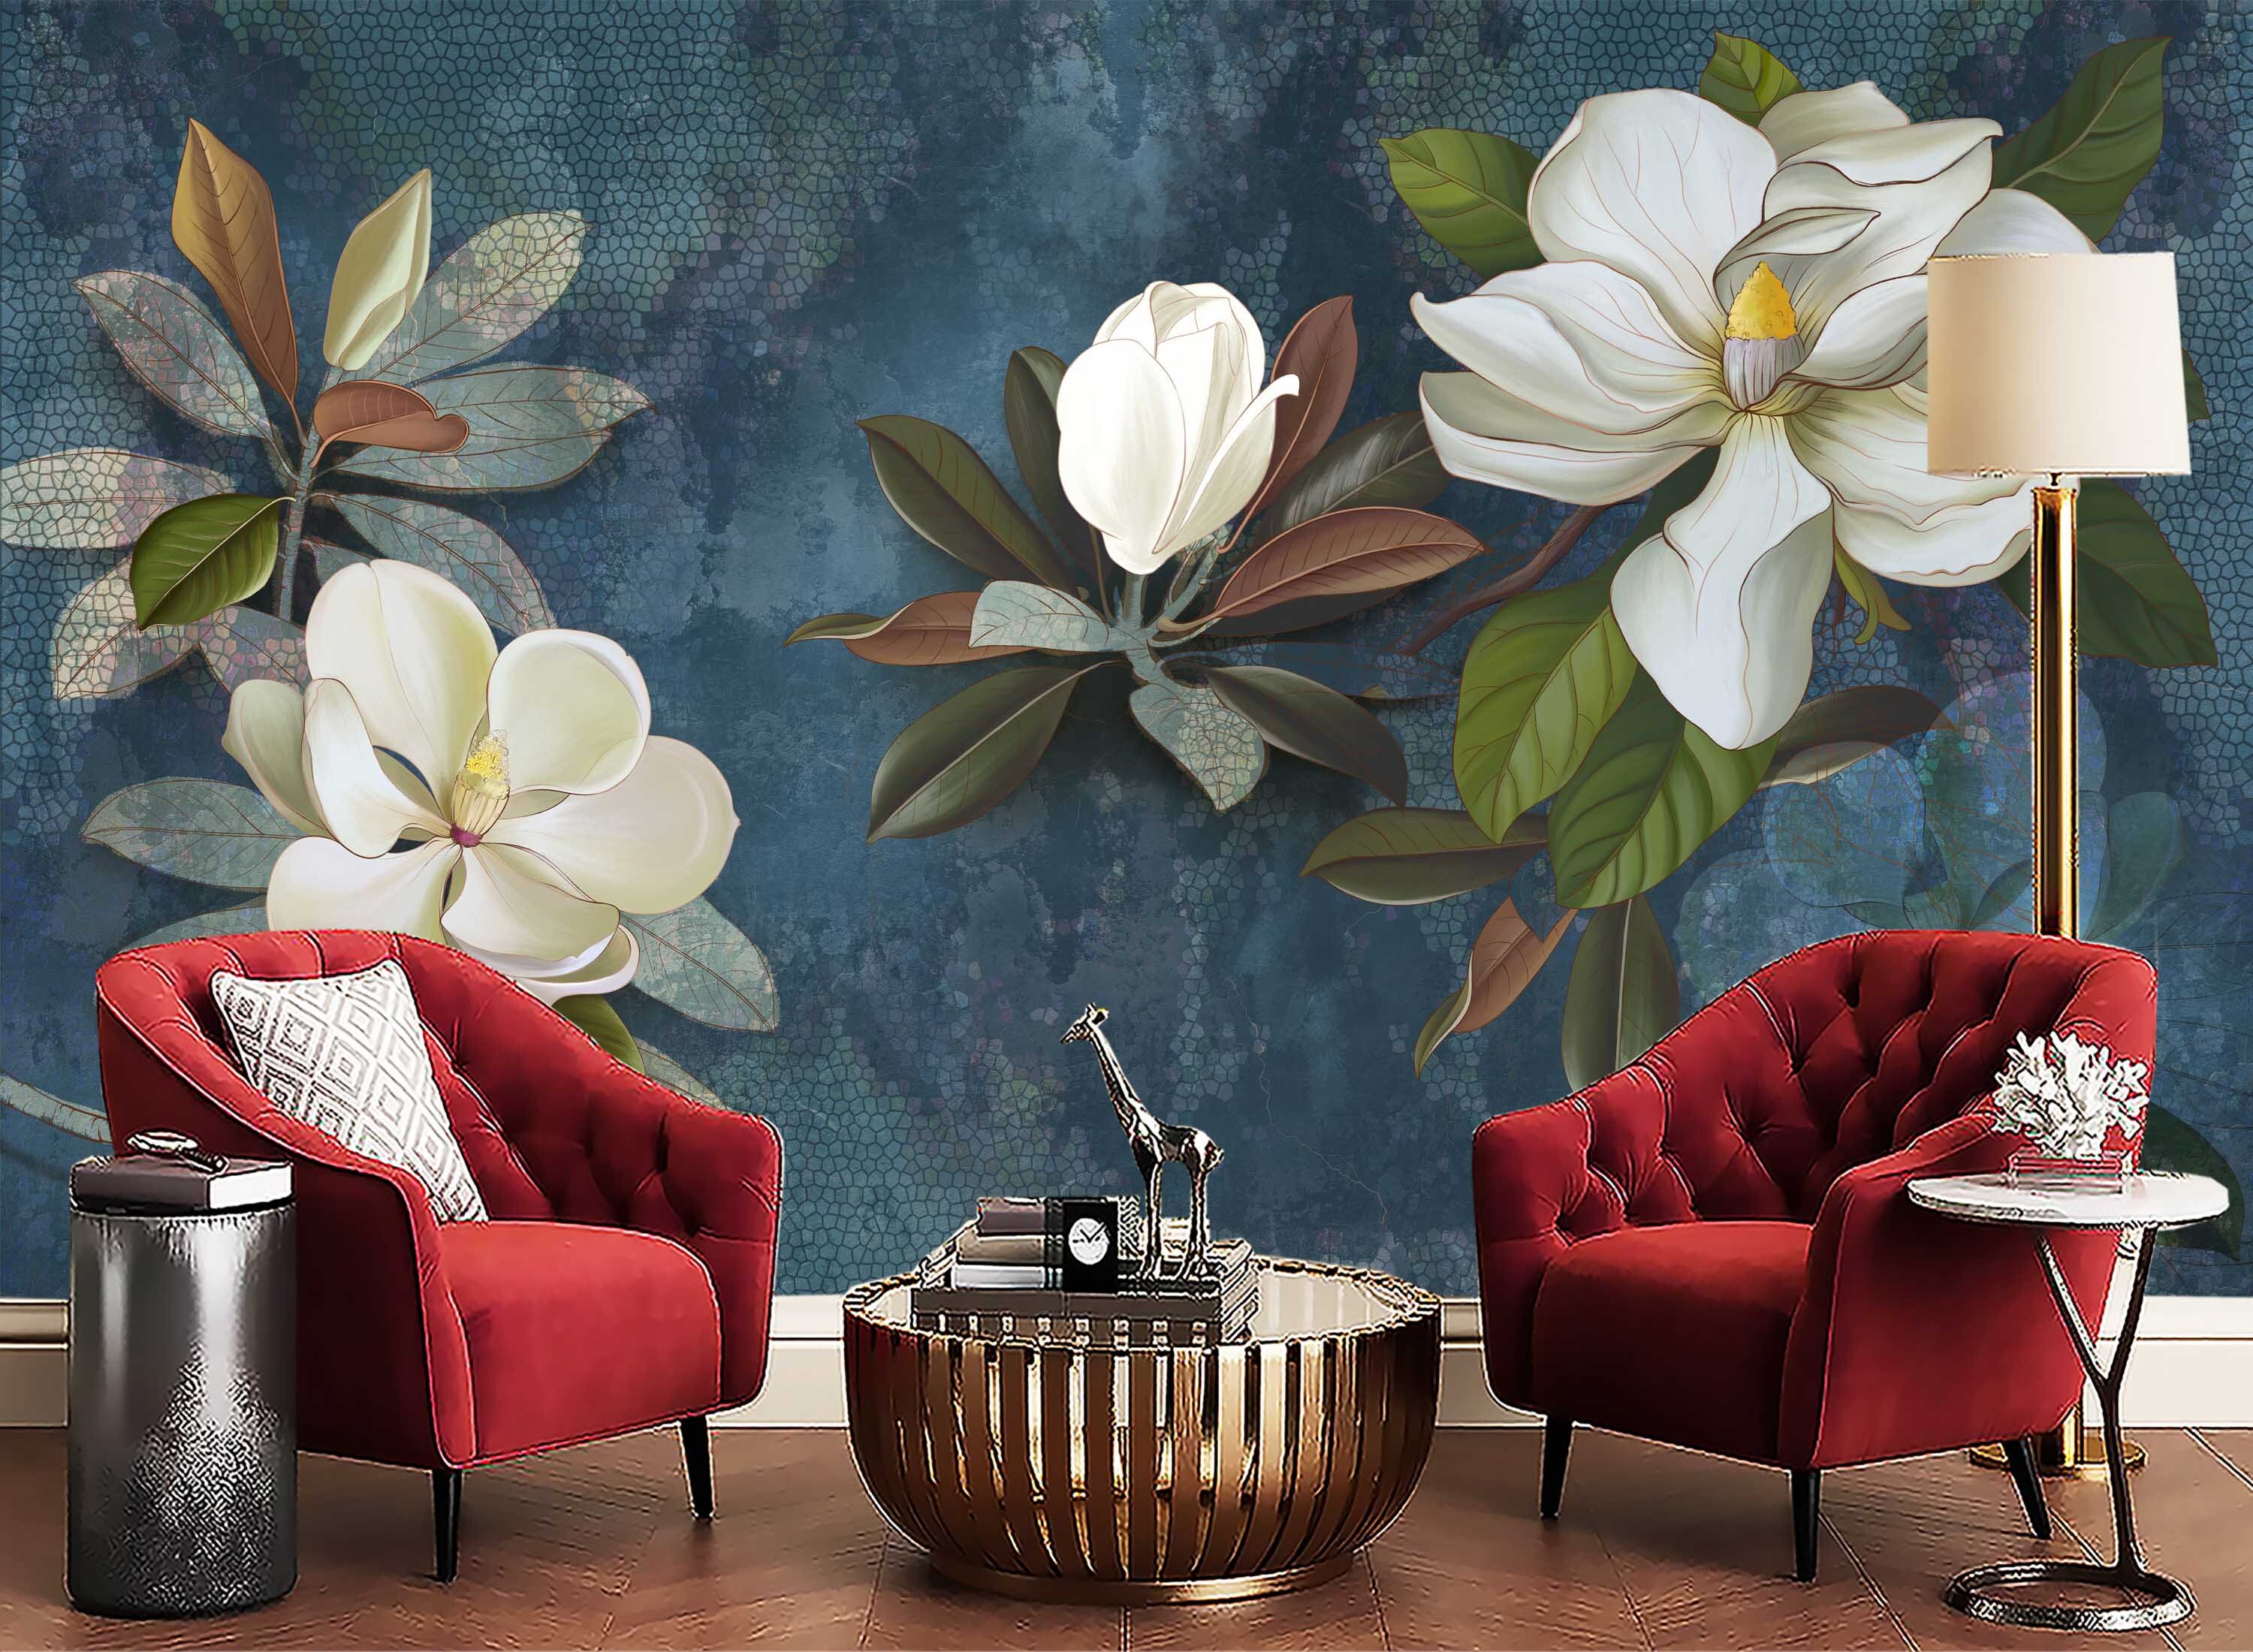 Floral Wallpaper Images  Free Download on Freepik